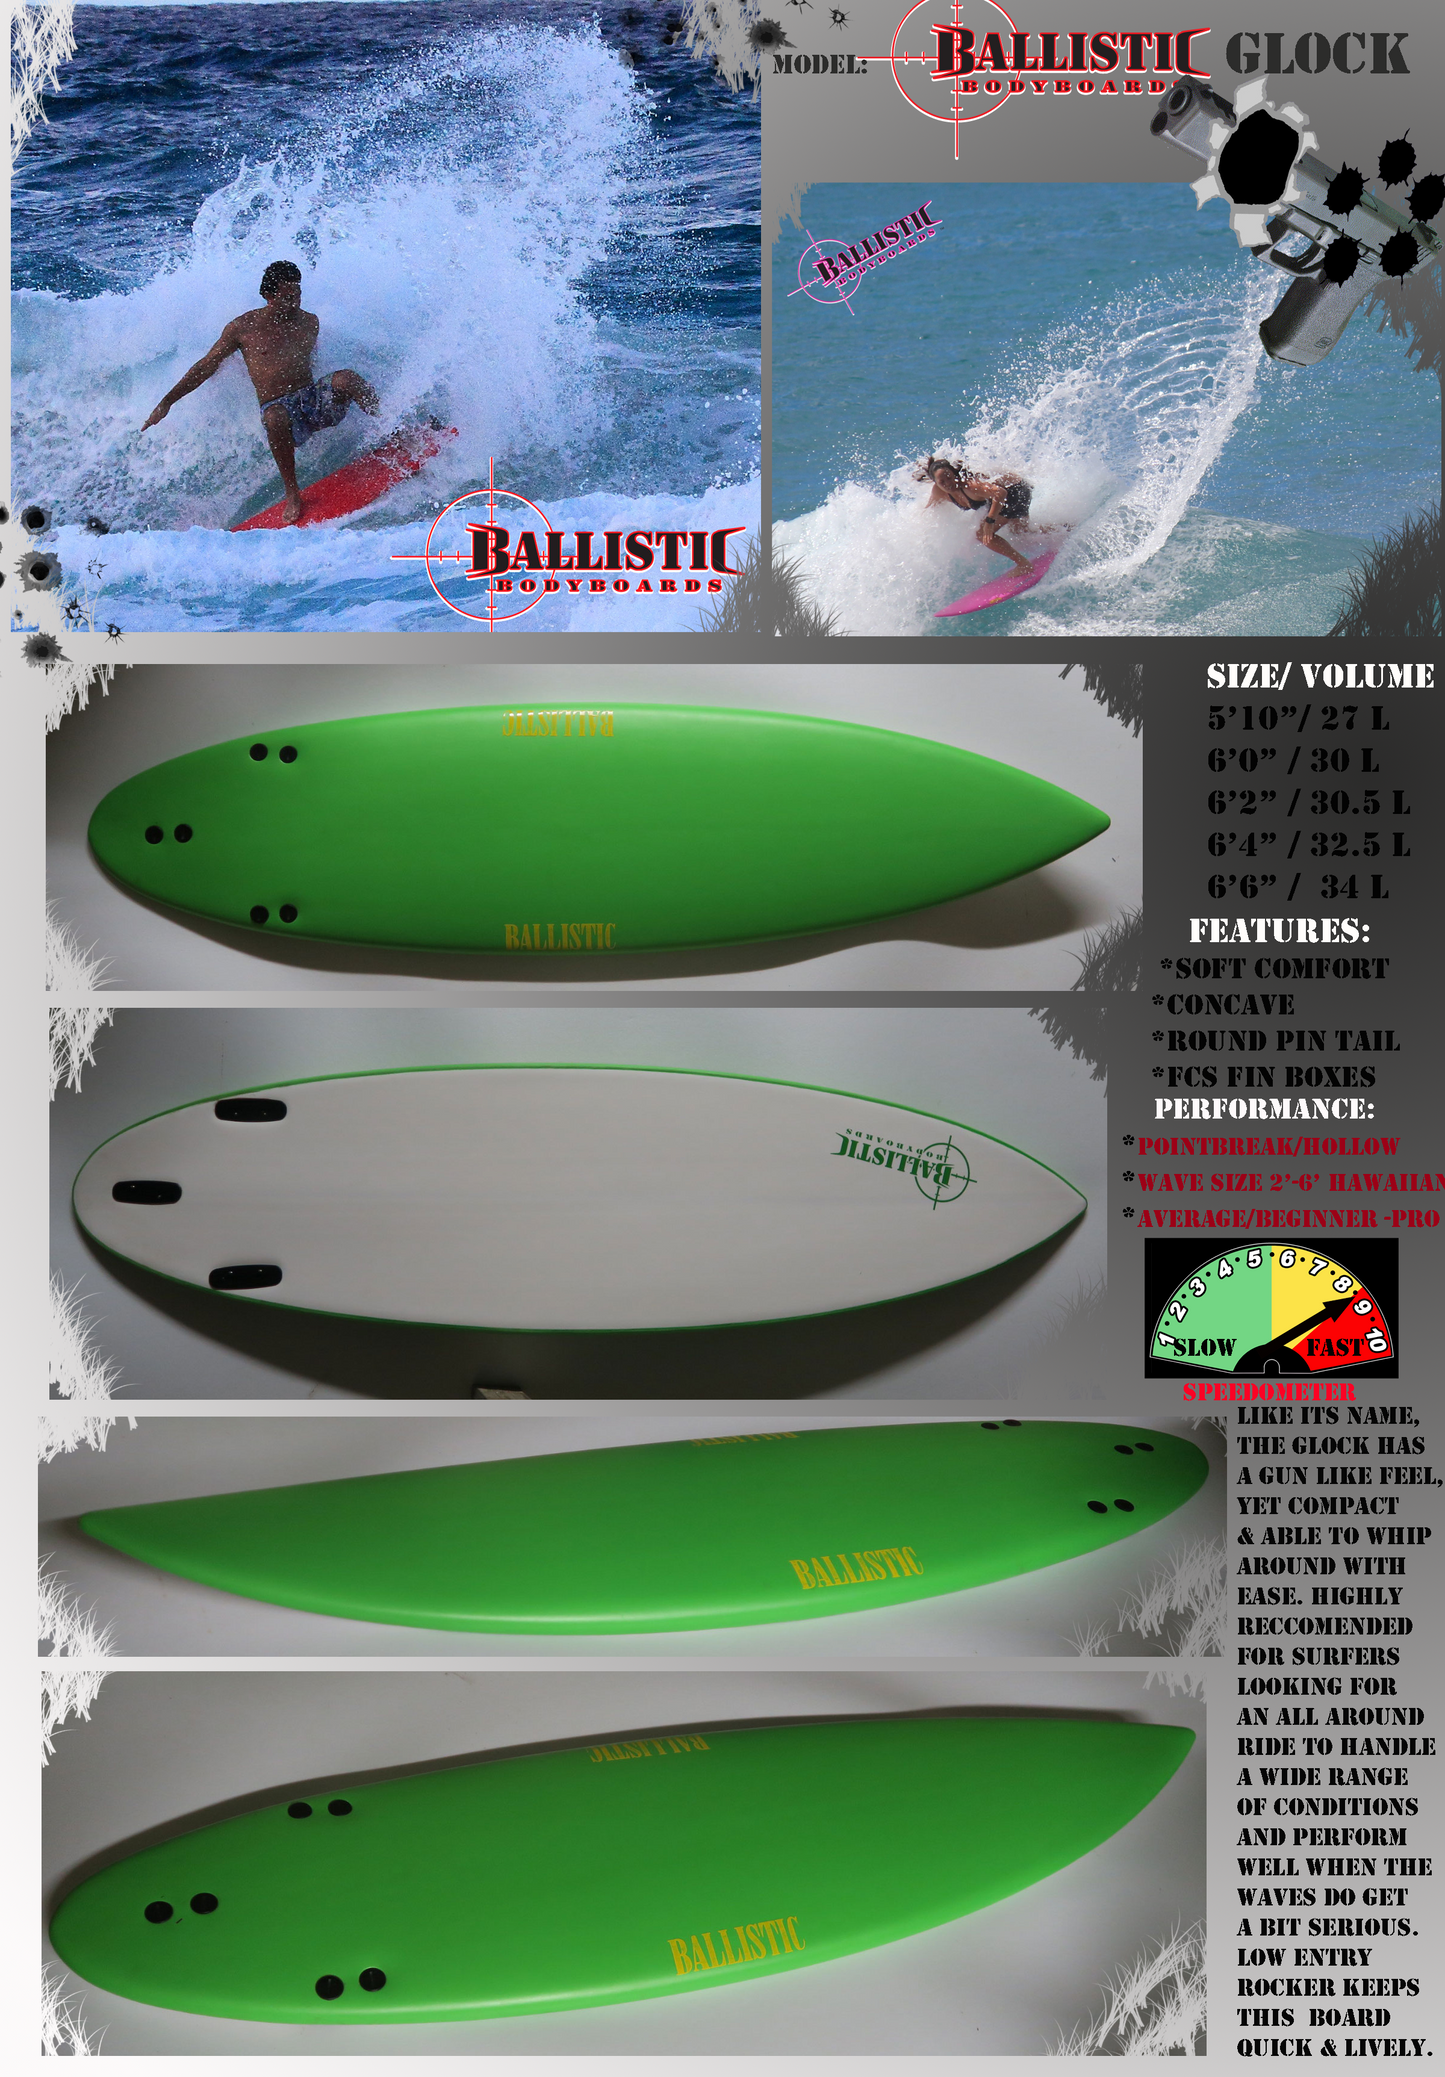 Ballistic Glock Surfboard